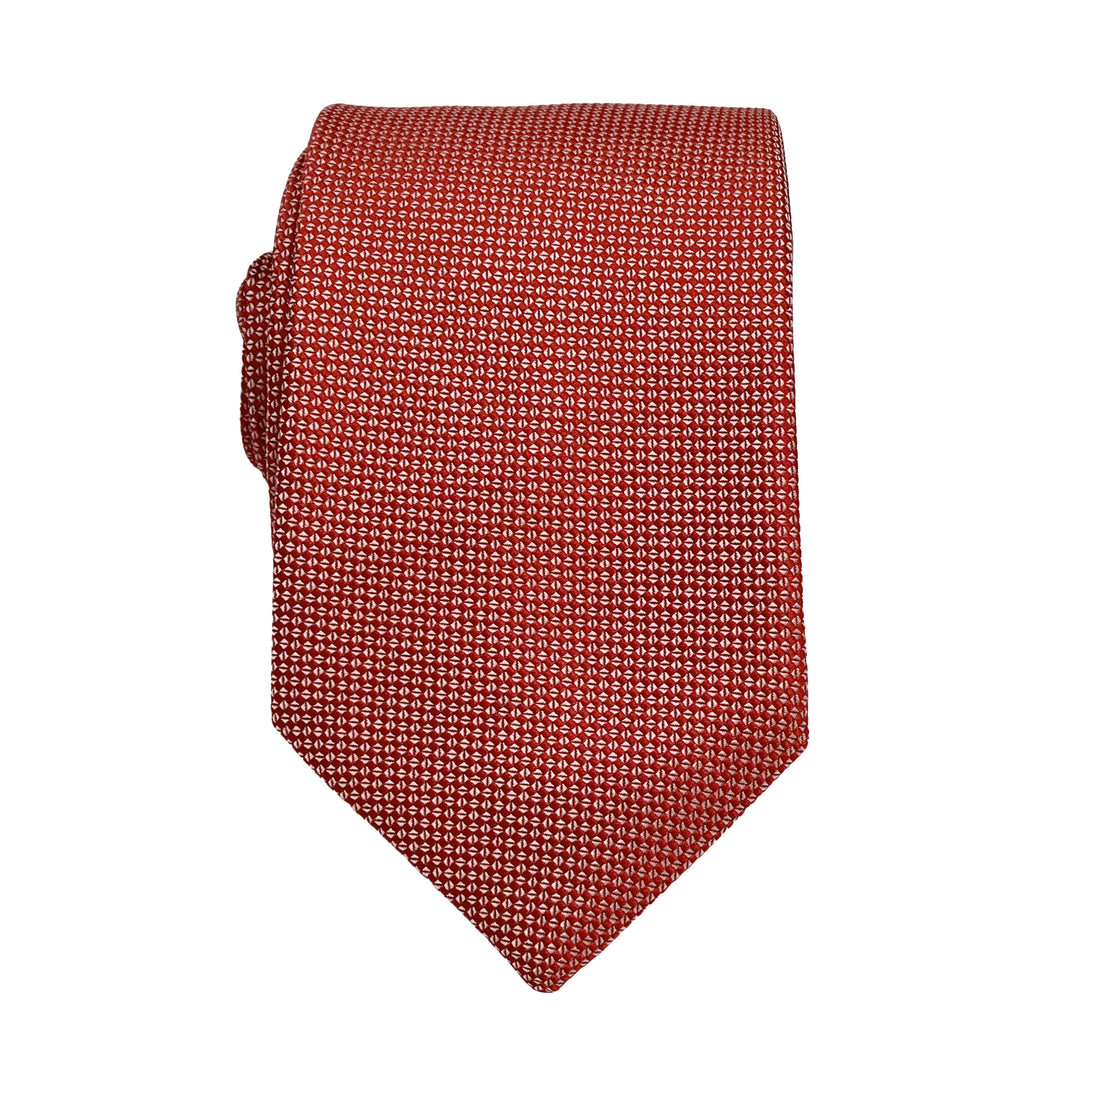 JAOXFORDT James Adelin Luxury Oxford Weave 7.5cm Width Tie